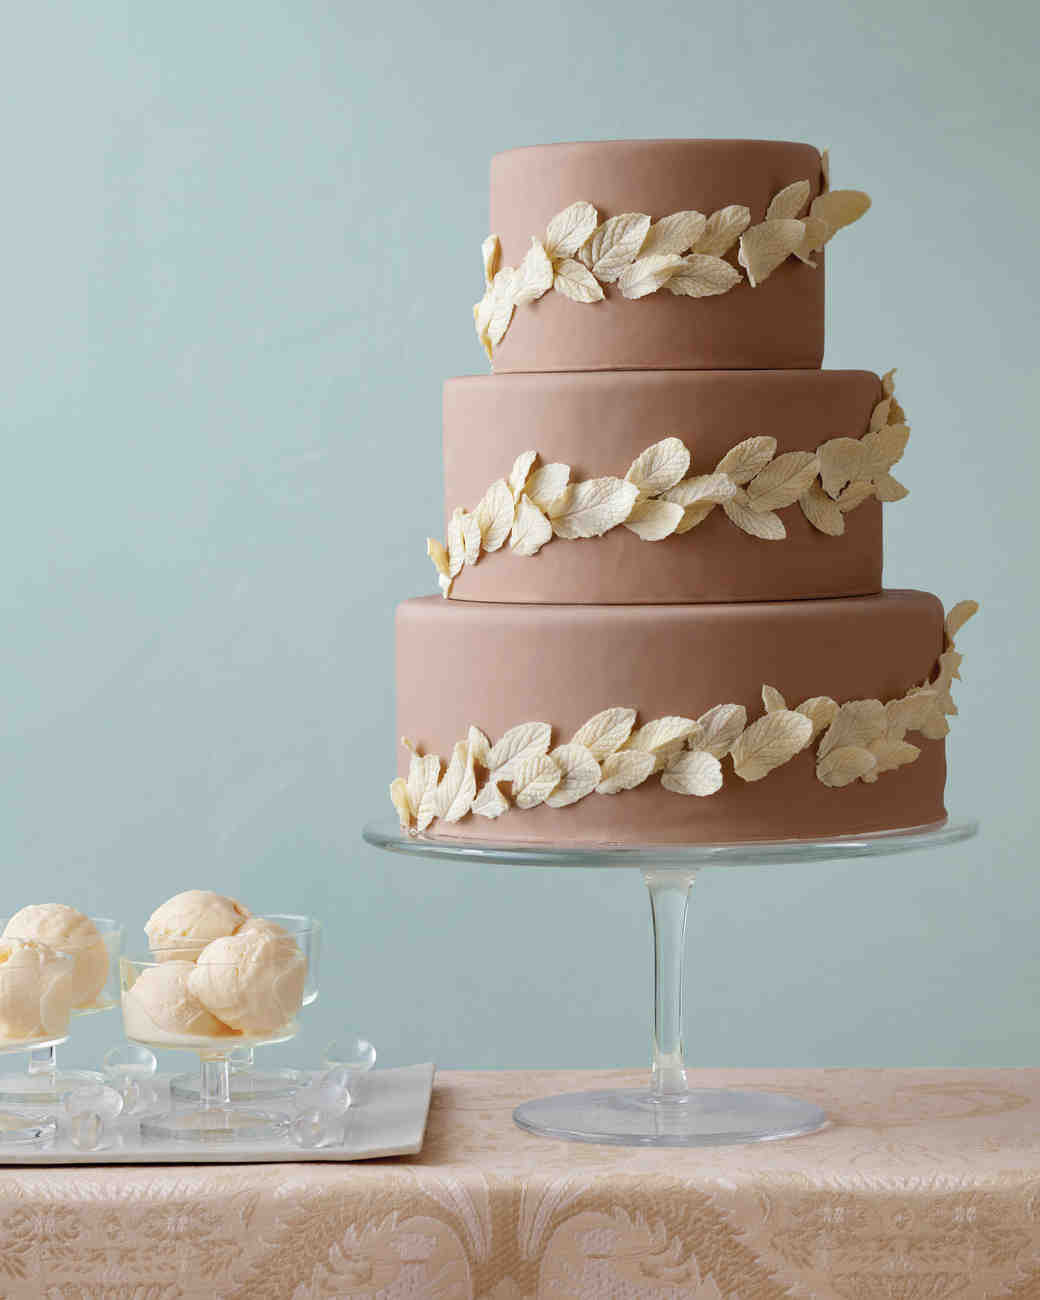 DIY Wedding Cakes
 11 DIY Wedding Cake Ideas That Will Transform Your Tiers